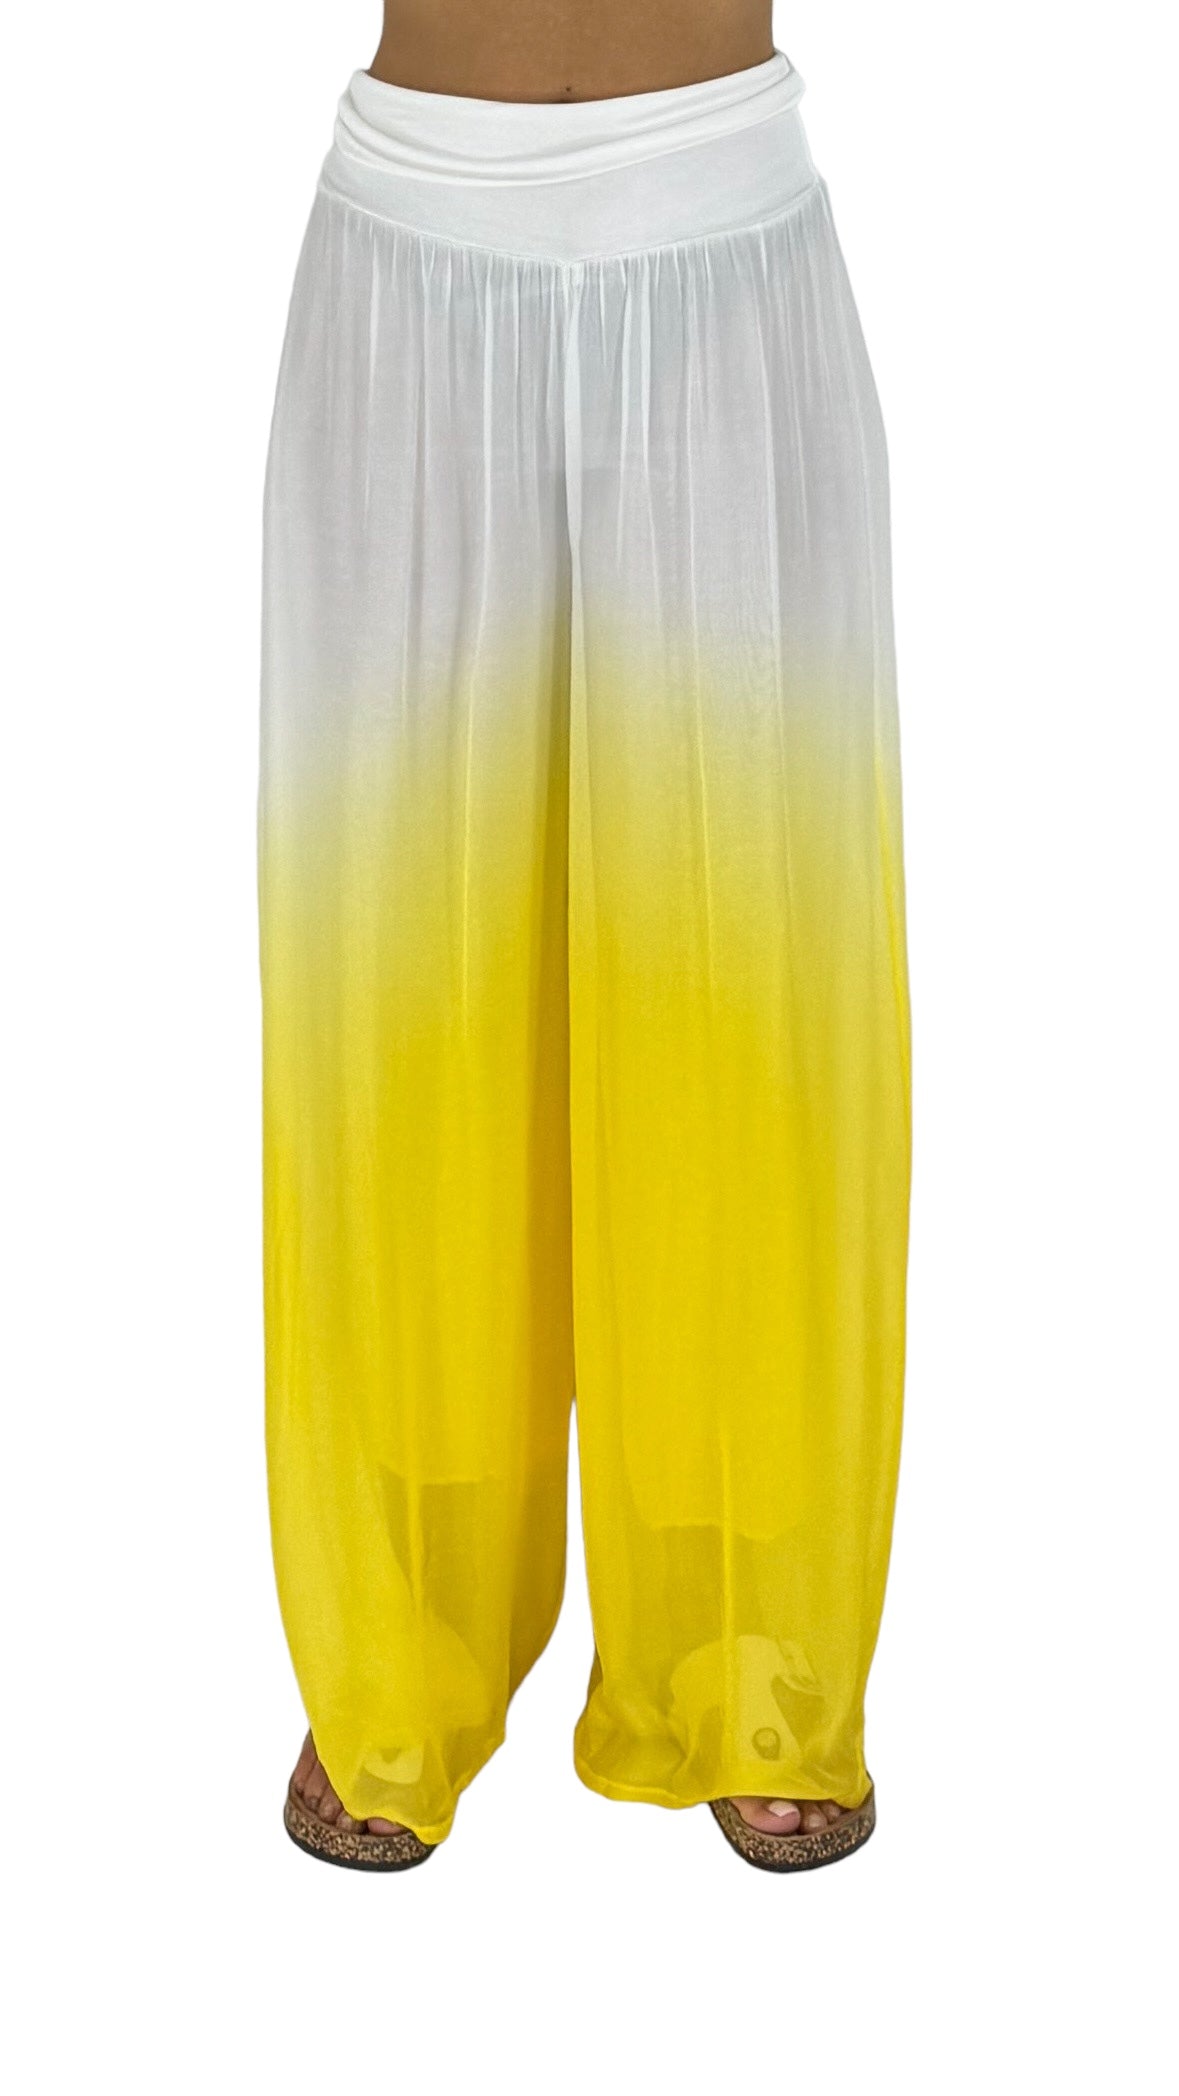 Toni yellow pants